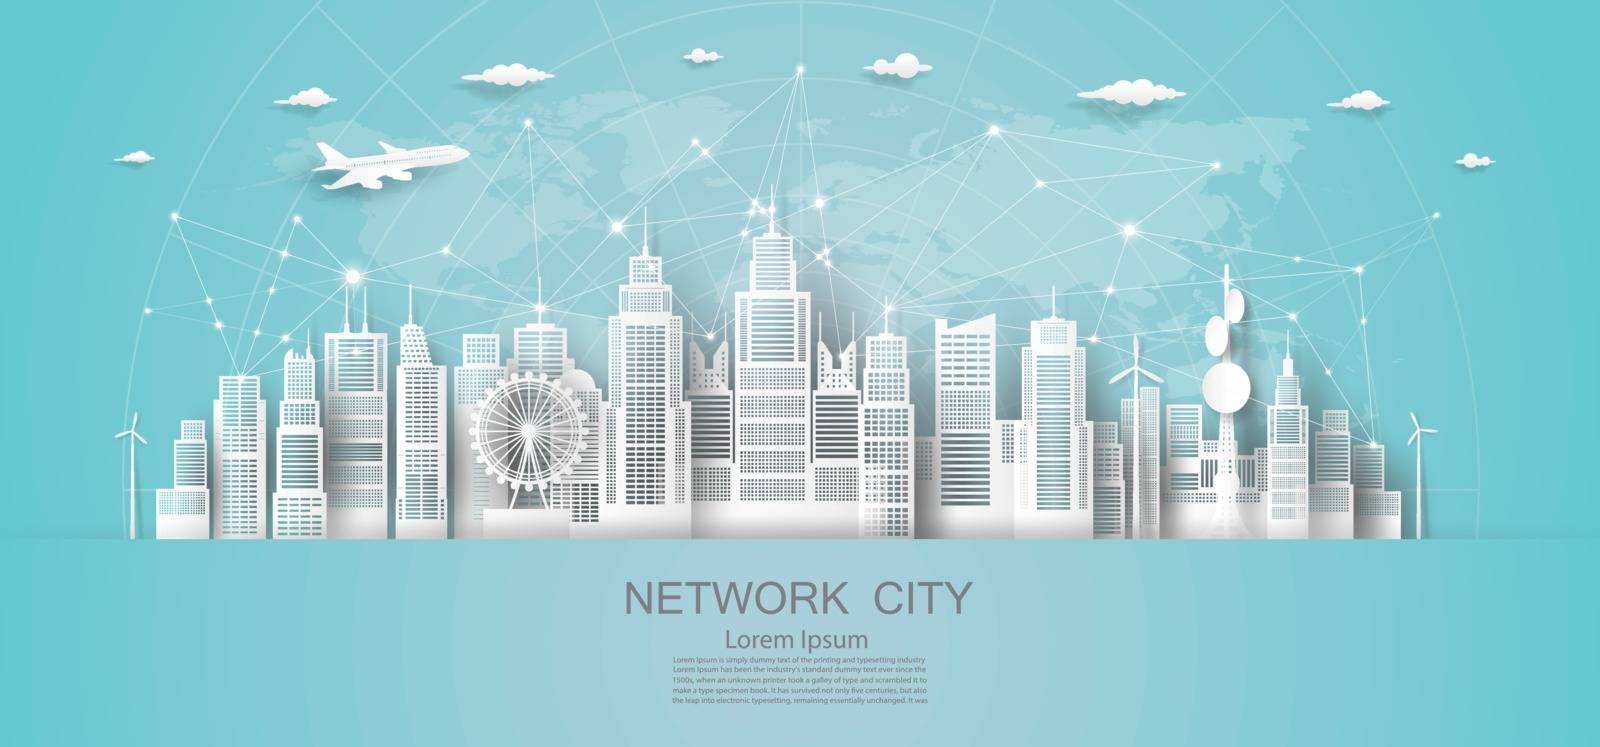 Modern economic technology city network in downtown skyscraper b by Painterstok